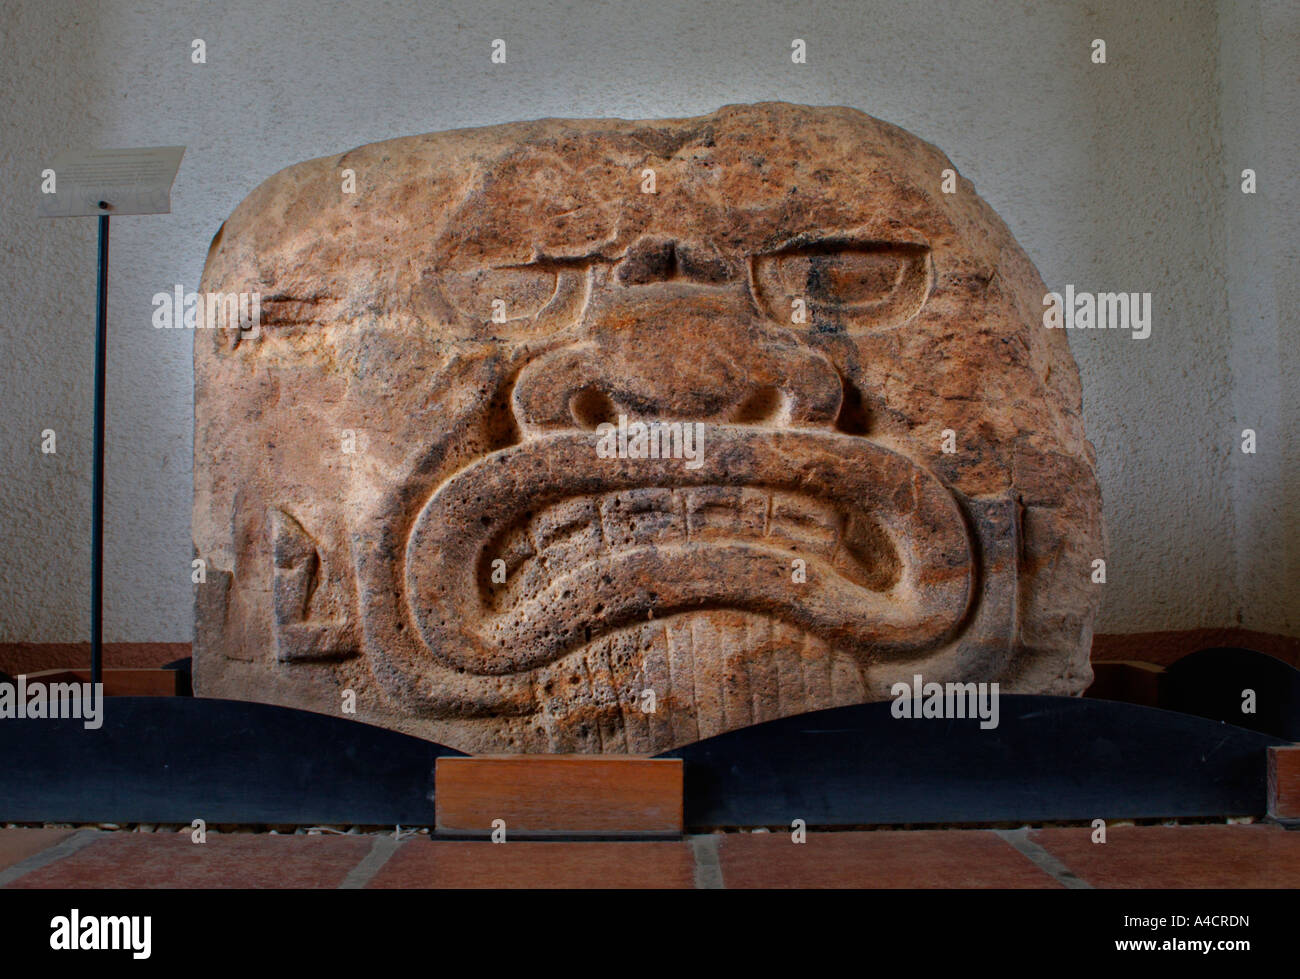 Steinskulptur, das Museum von San Lorenzo Tenochtitlan, Mexiko, 1200BC um 900 v. Chr. Olmeken-Kultur, Coatzacoalcos Fluss Entwässerung Stockfoto